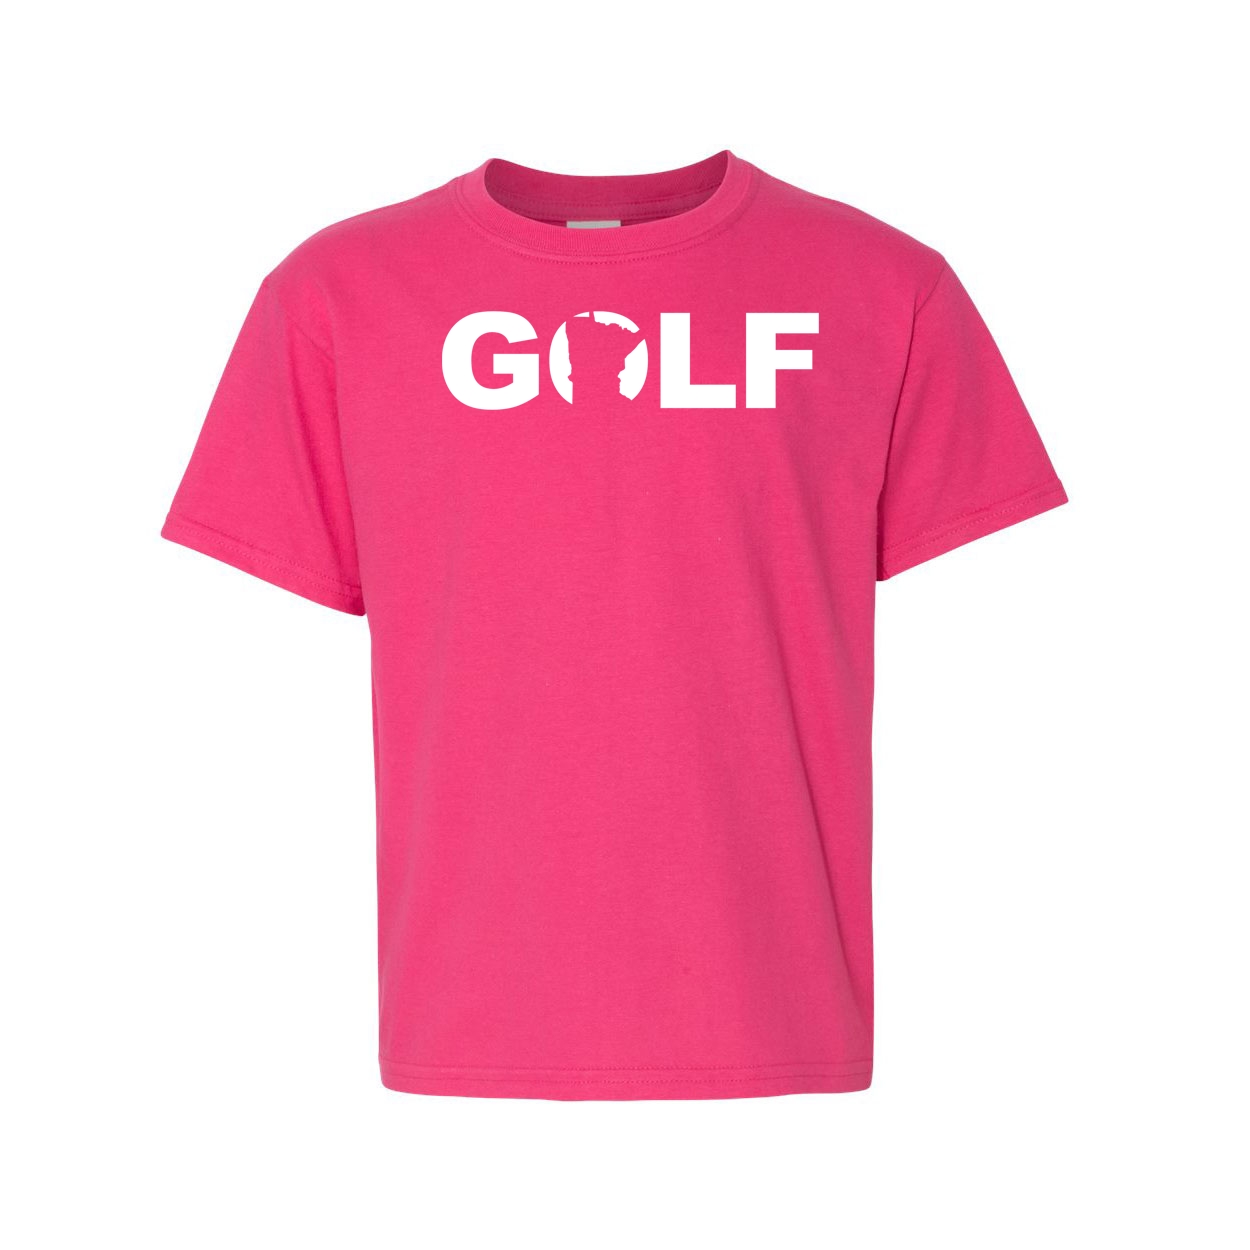 Golf Minnesota Classic Youth T-Shirt Pink (White Logo)